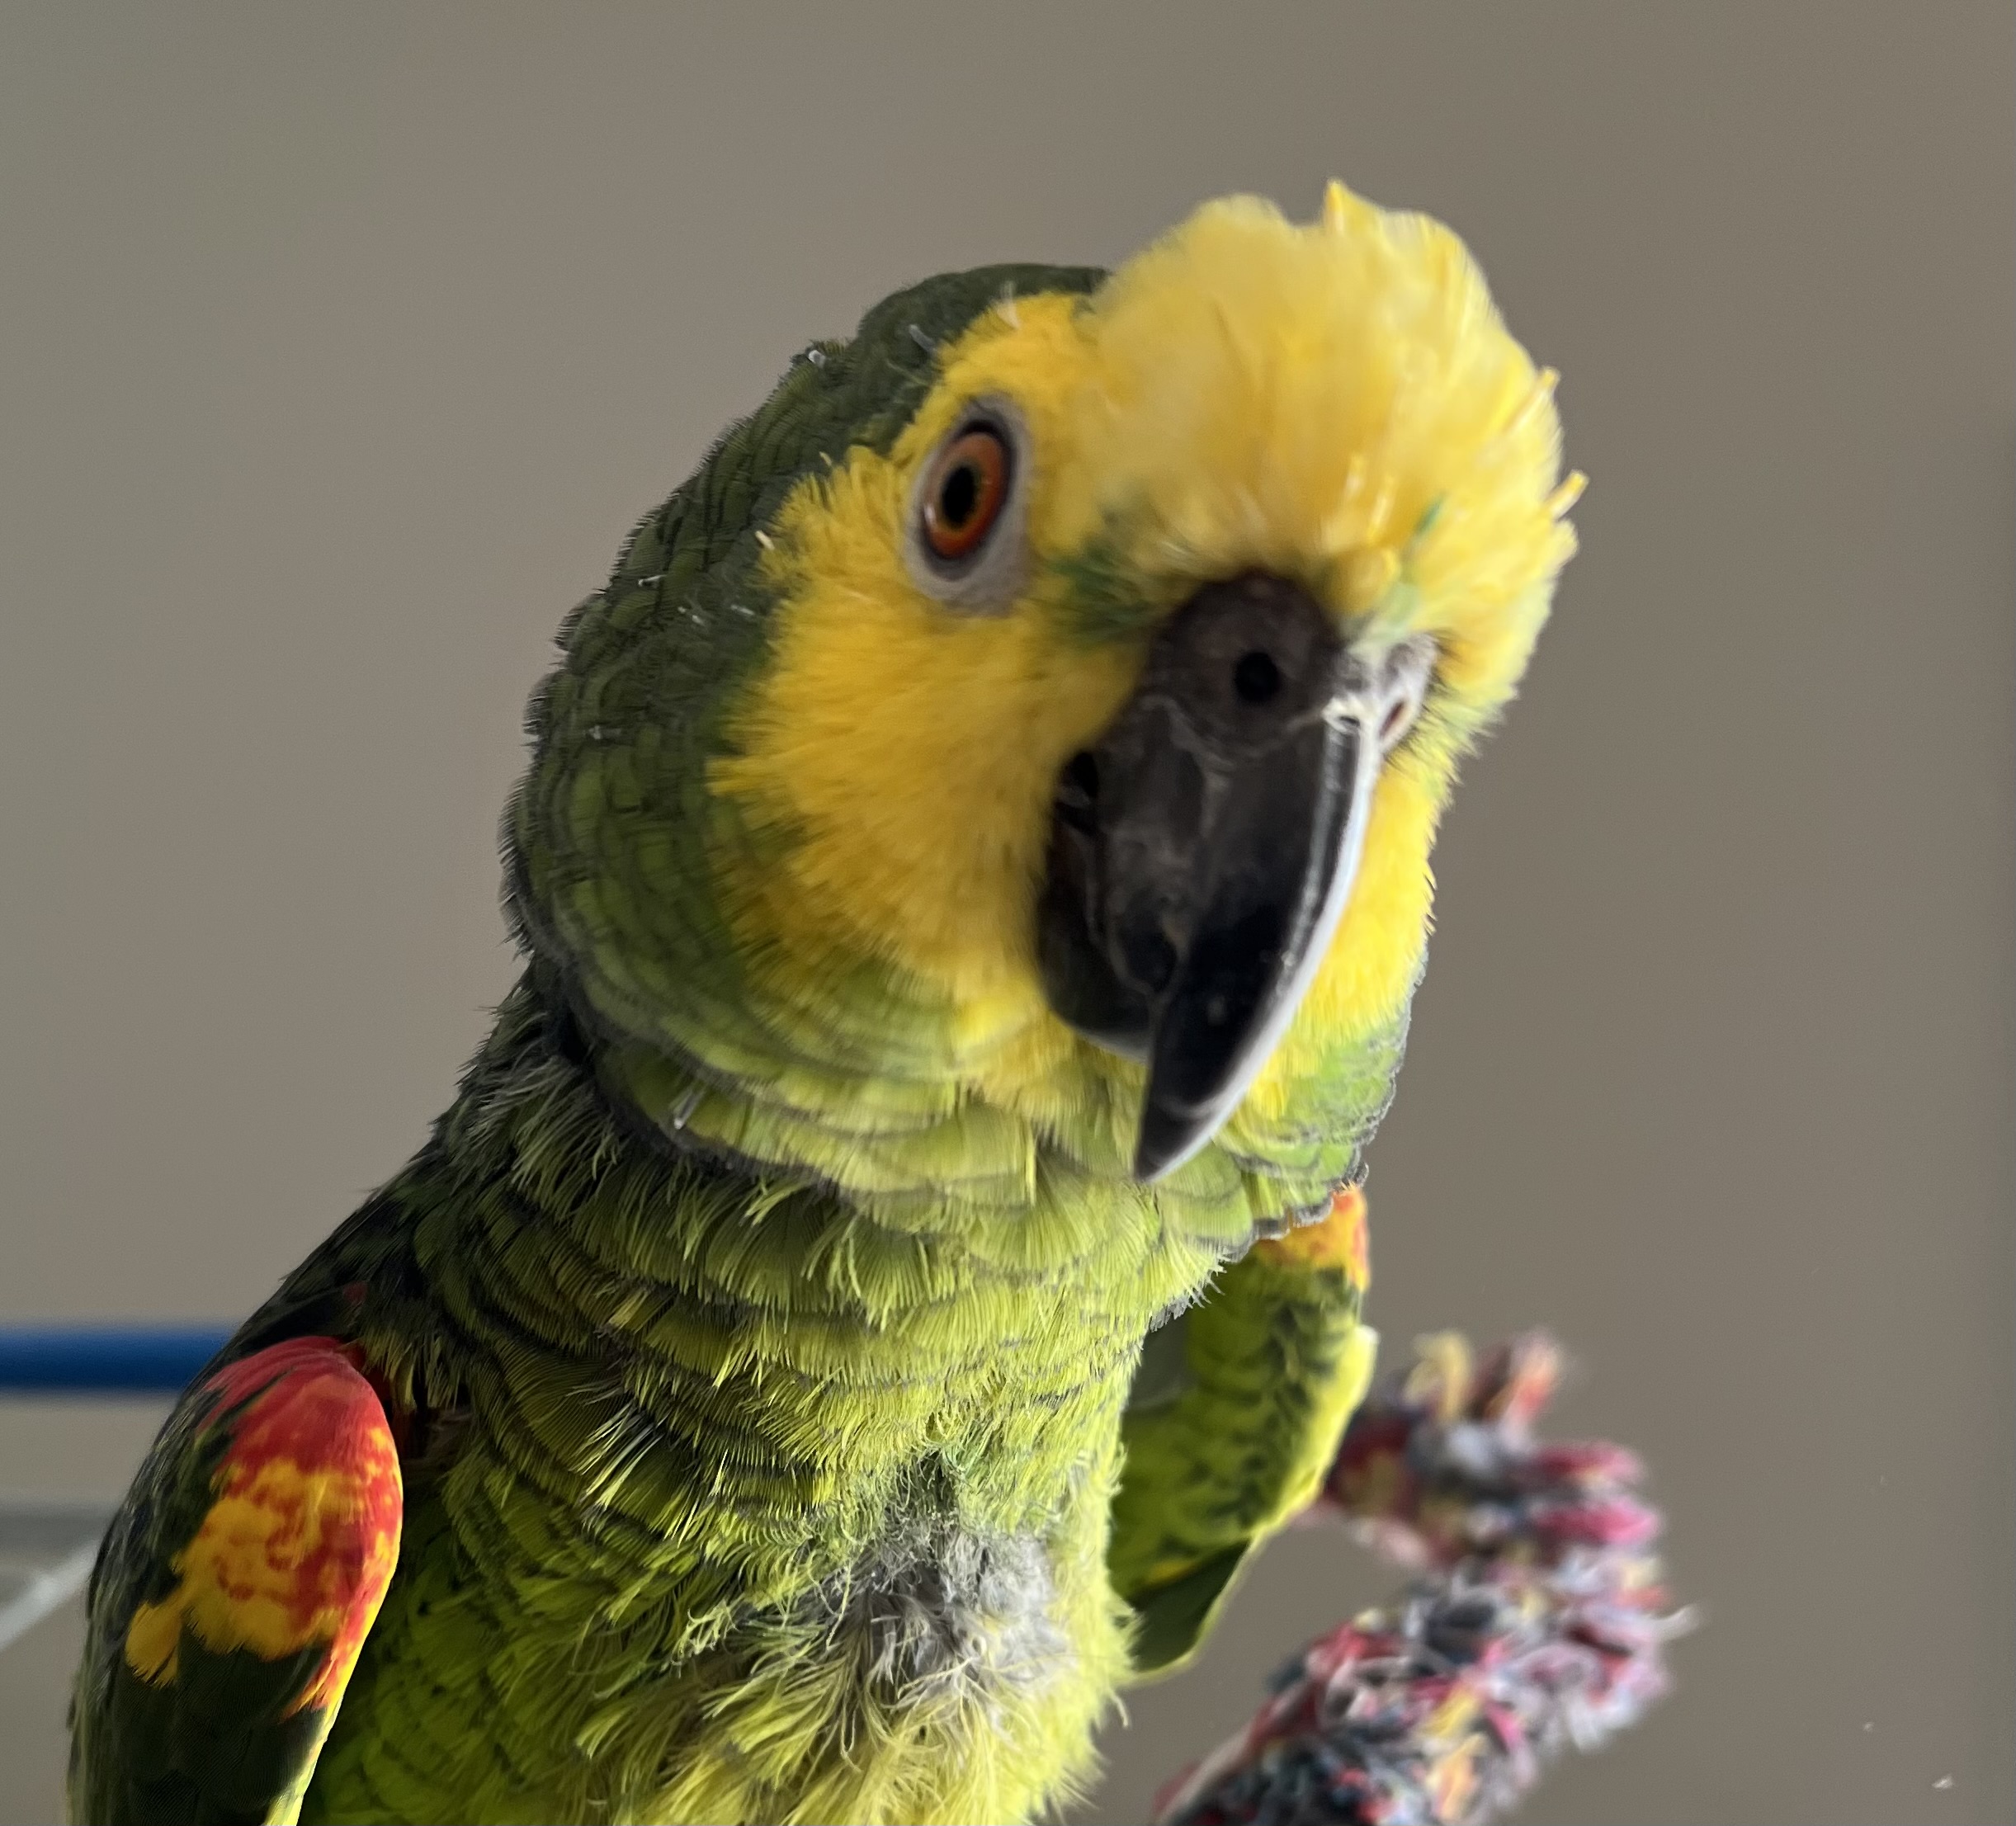 Samson the Parrot